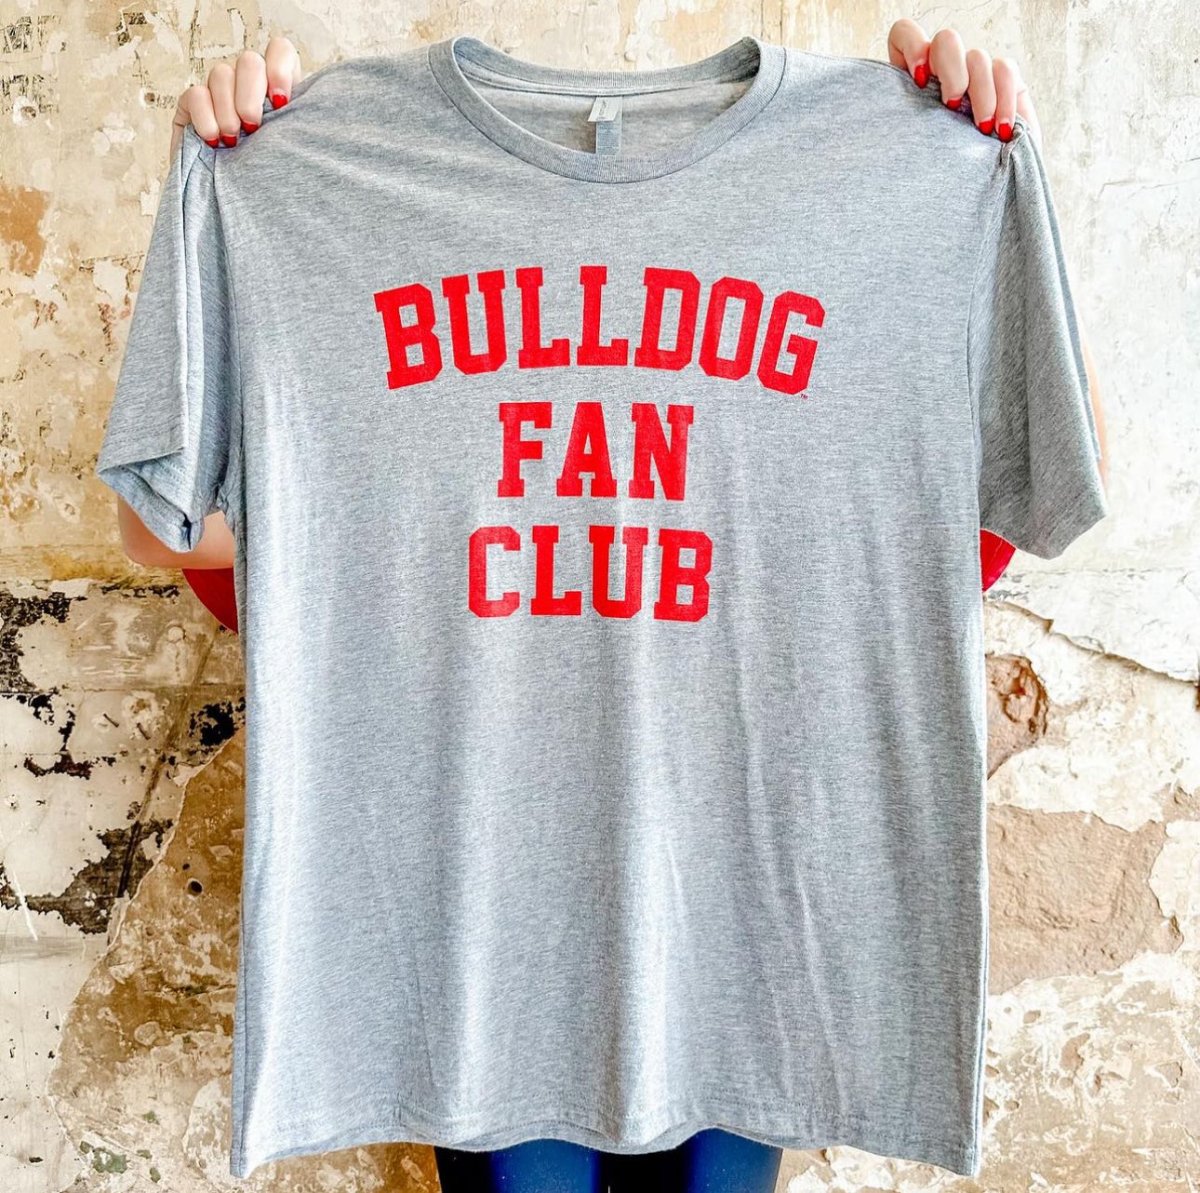 UGA Bulldog Fan Club T-Shirt - Shop B-Unlimited